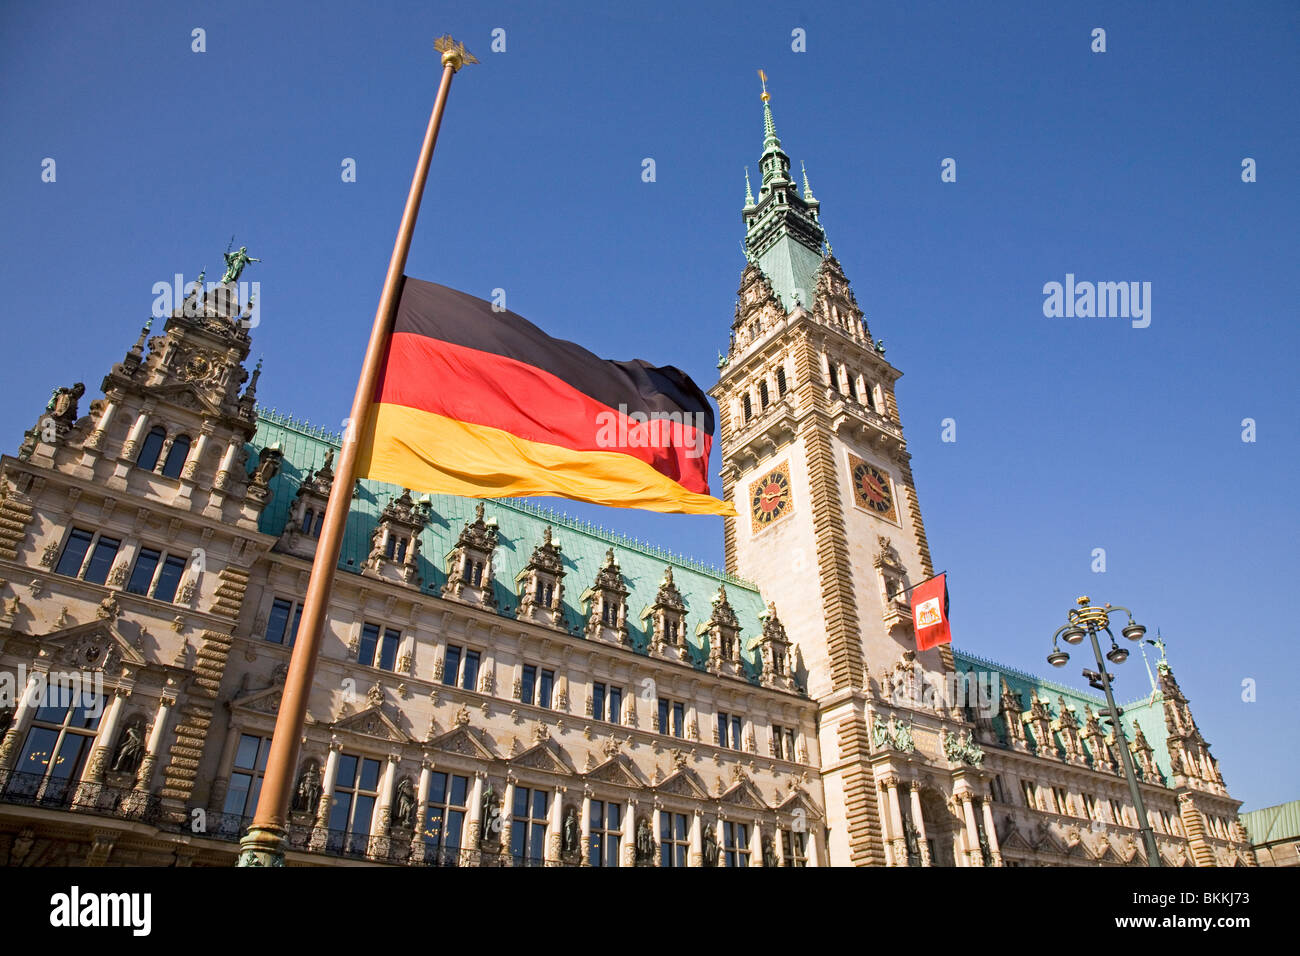 The German flag flies at half-mast in front of the Hamburger Rathaus (Hamburg Town Hall) in Hamburg, Germany. Stock Photo